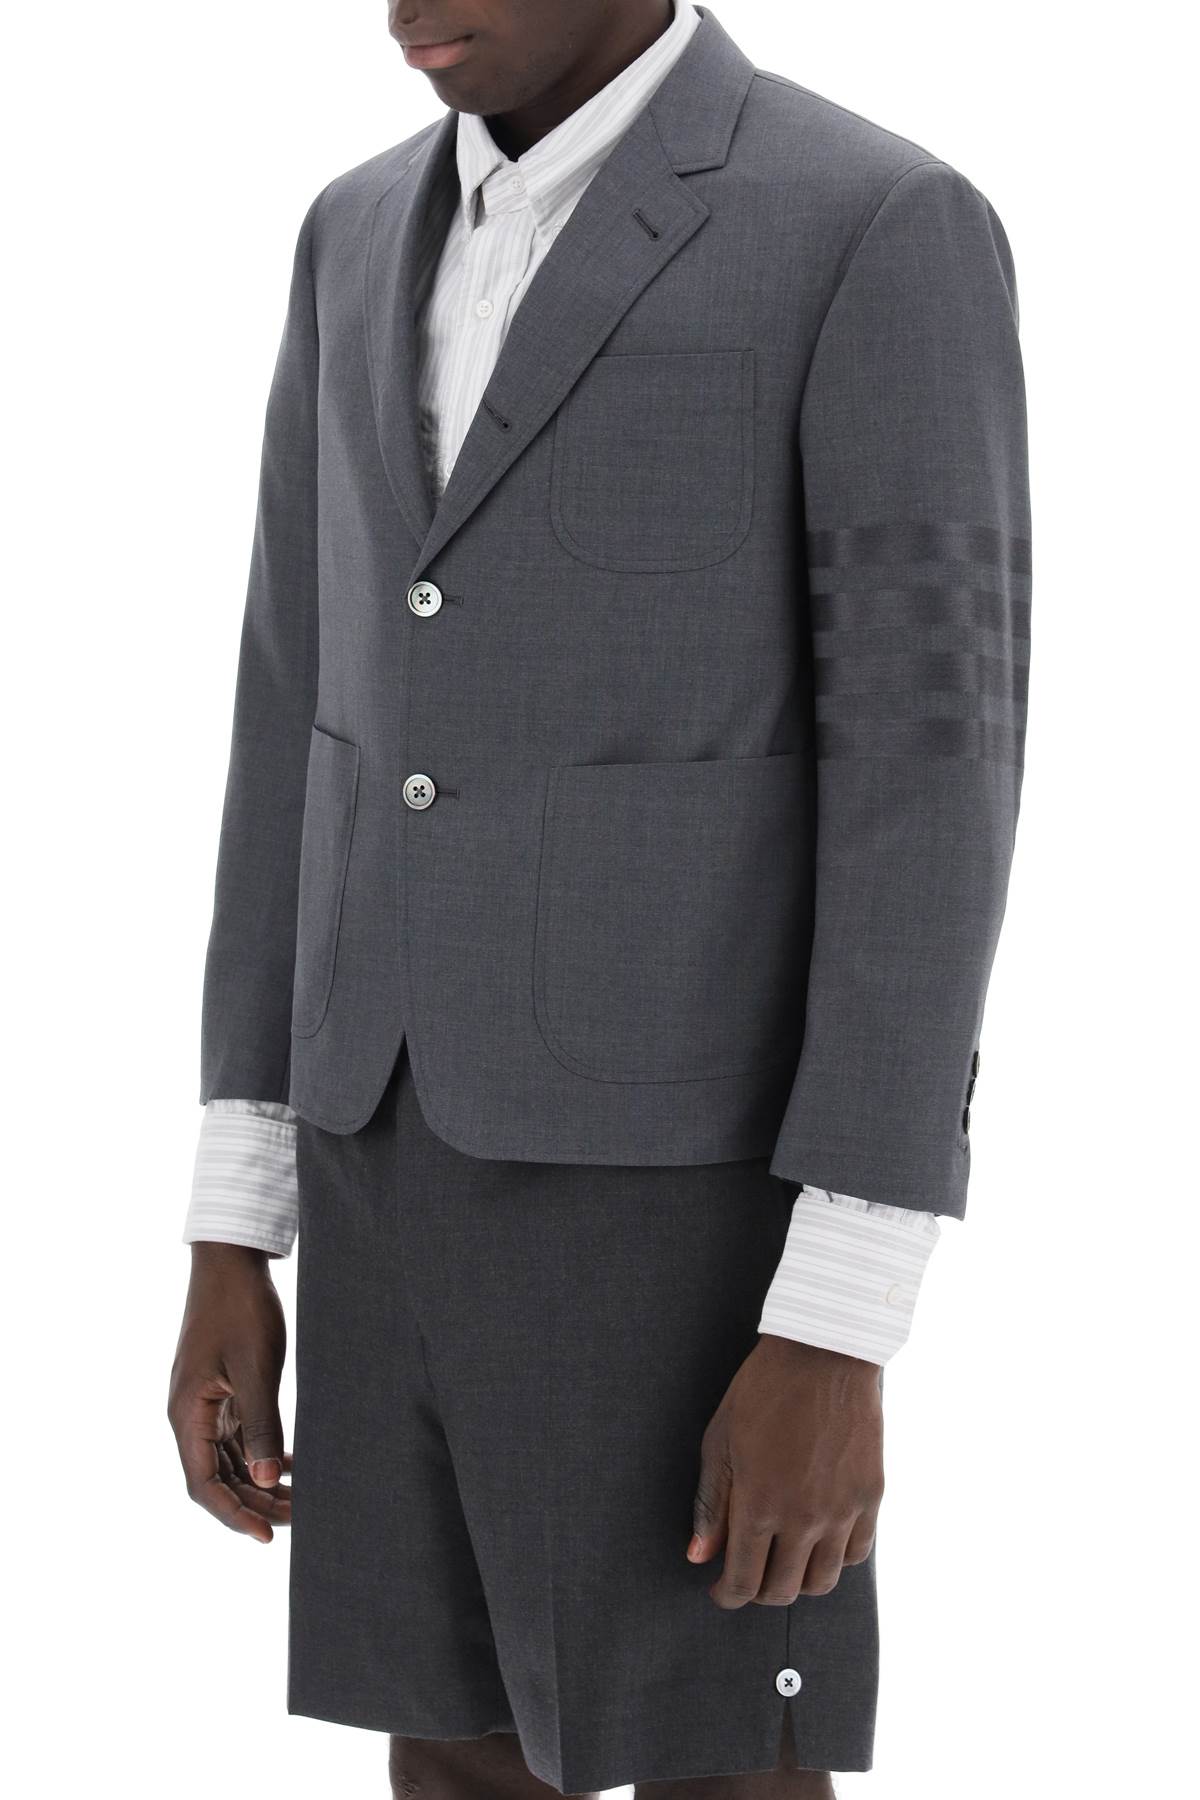 Thom browne 4-bar jacket in light wool-3